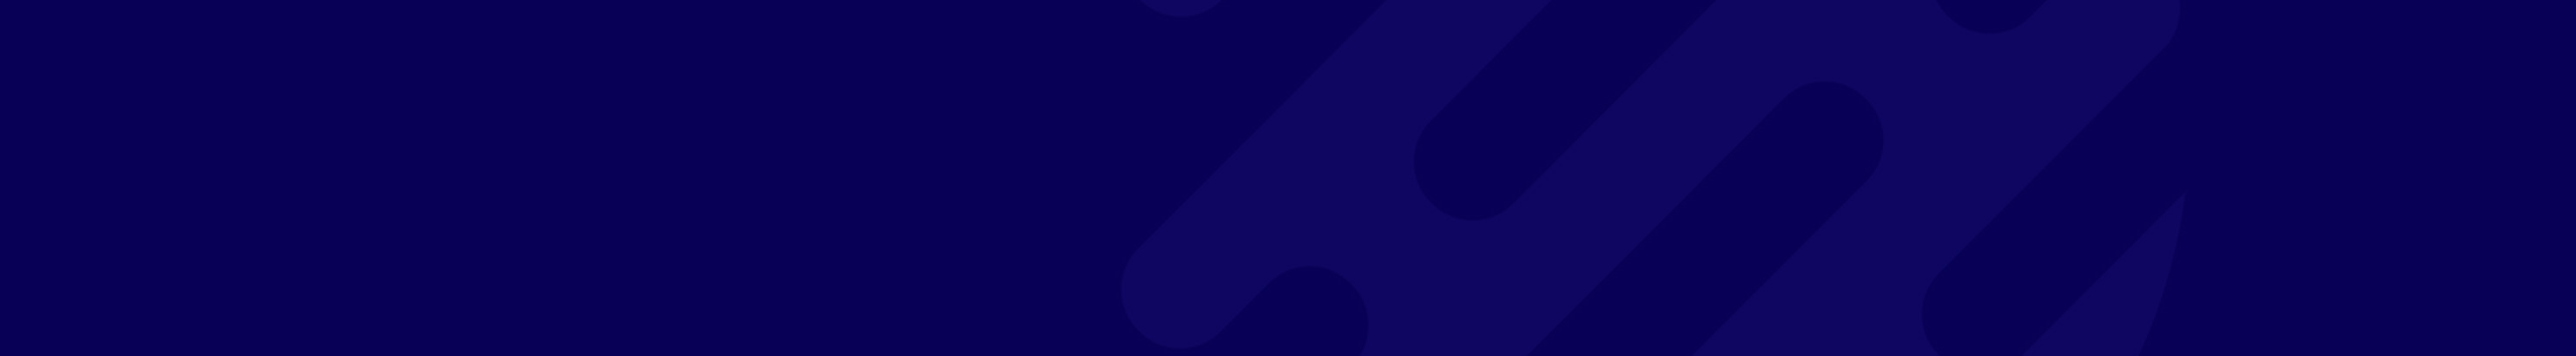 Digitalni Pixel's profile banner